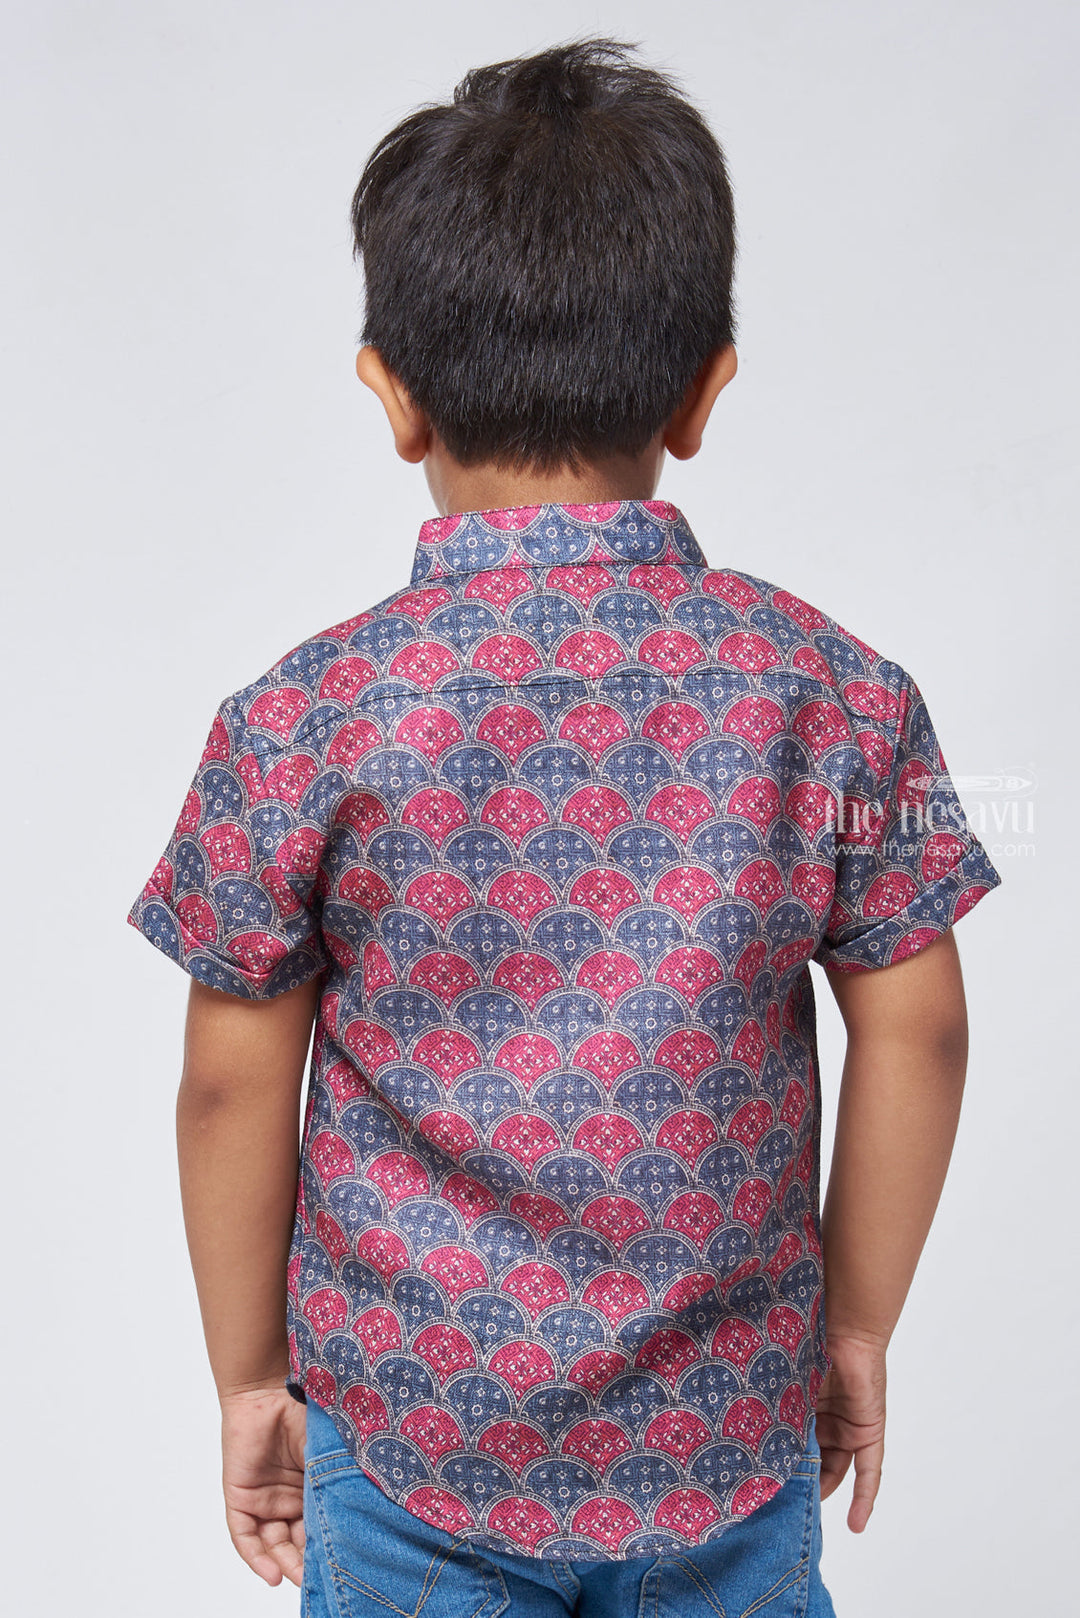 The Nesavu Boys Linen Shirt Dapper Design Boys Perfectly Tailored Shirt for Special Events Nesavu Latest Boys Shirt Design | Buy Premium Boys Shirt | The Nesavu